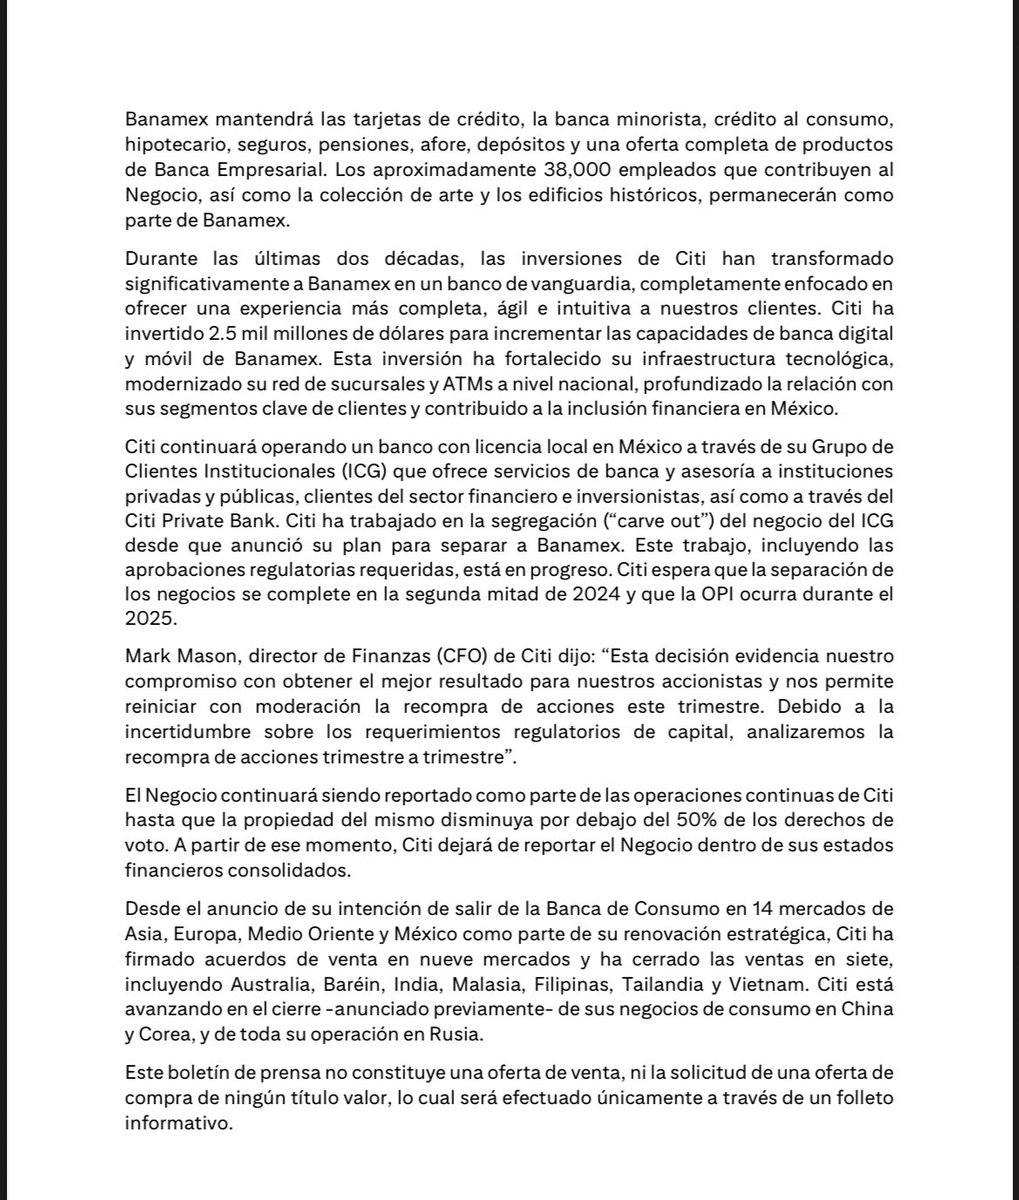 #ULTIMAHORA Citigroup decide desinvertir @Citibanamex Banamex a través de una Oferta Pública de Acciones